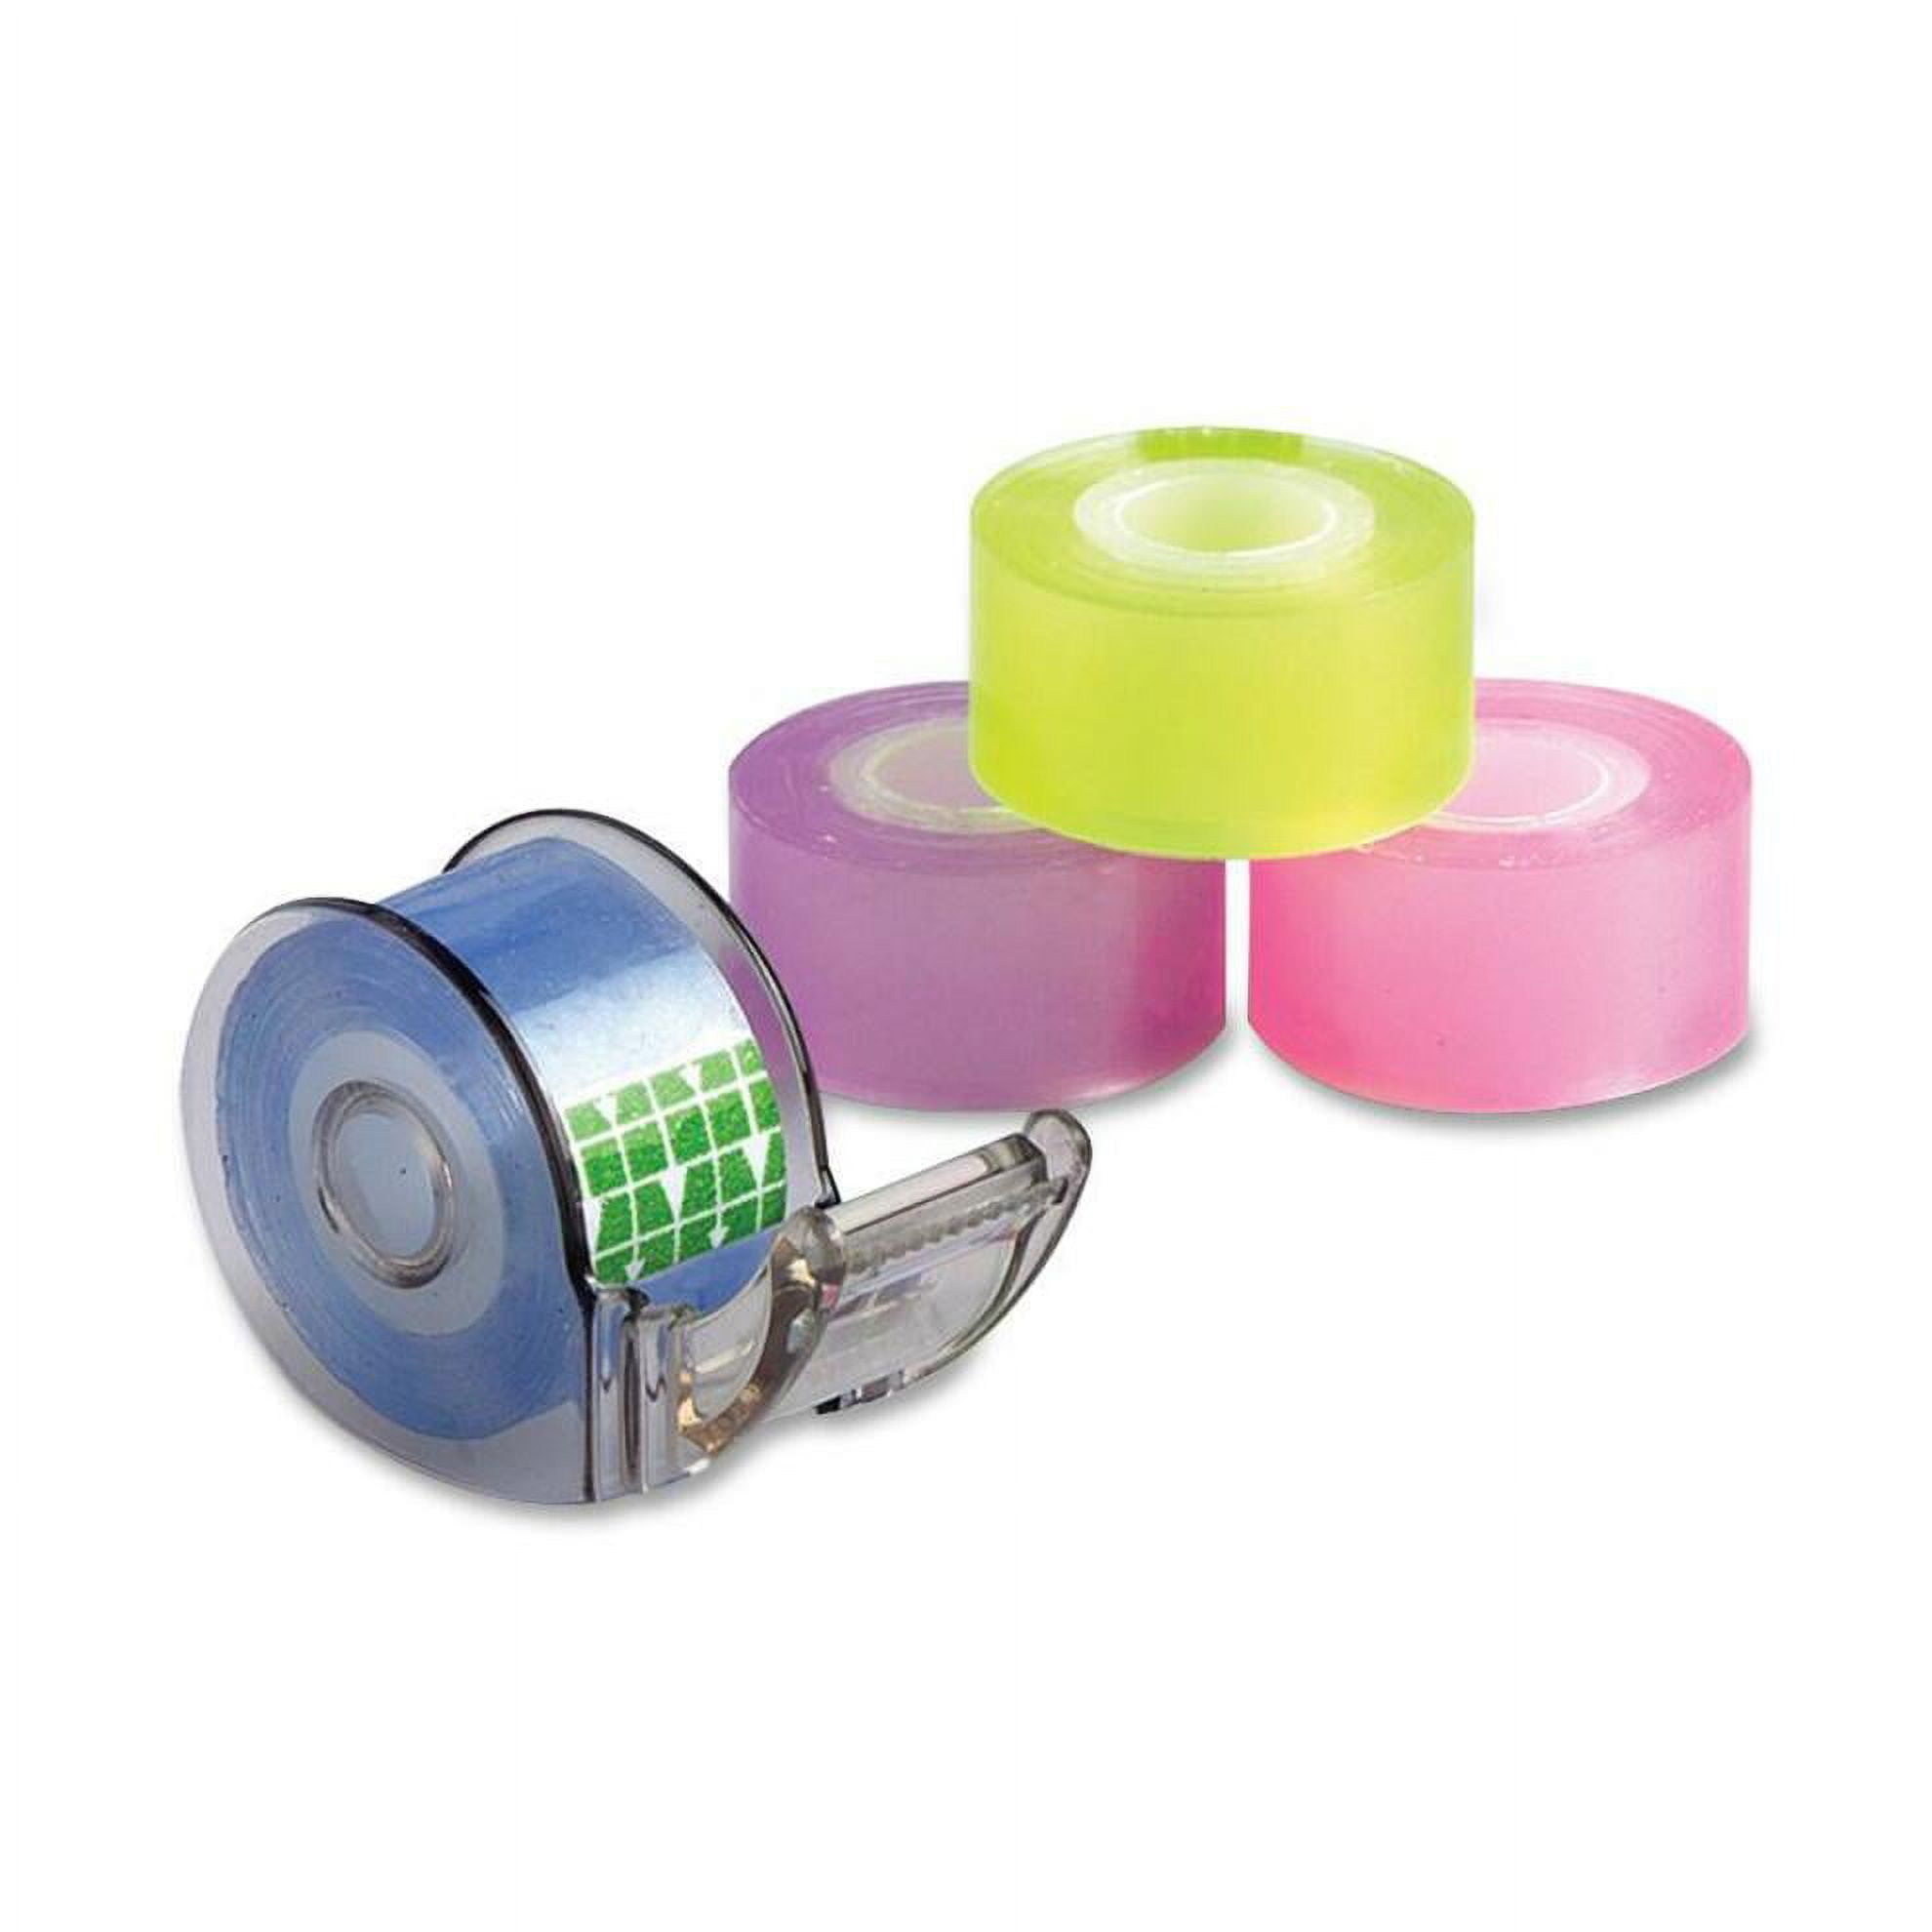 Baungartens mini tape and dispenser 8 rolls and 2 dispenser 20340 Multi  Color